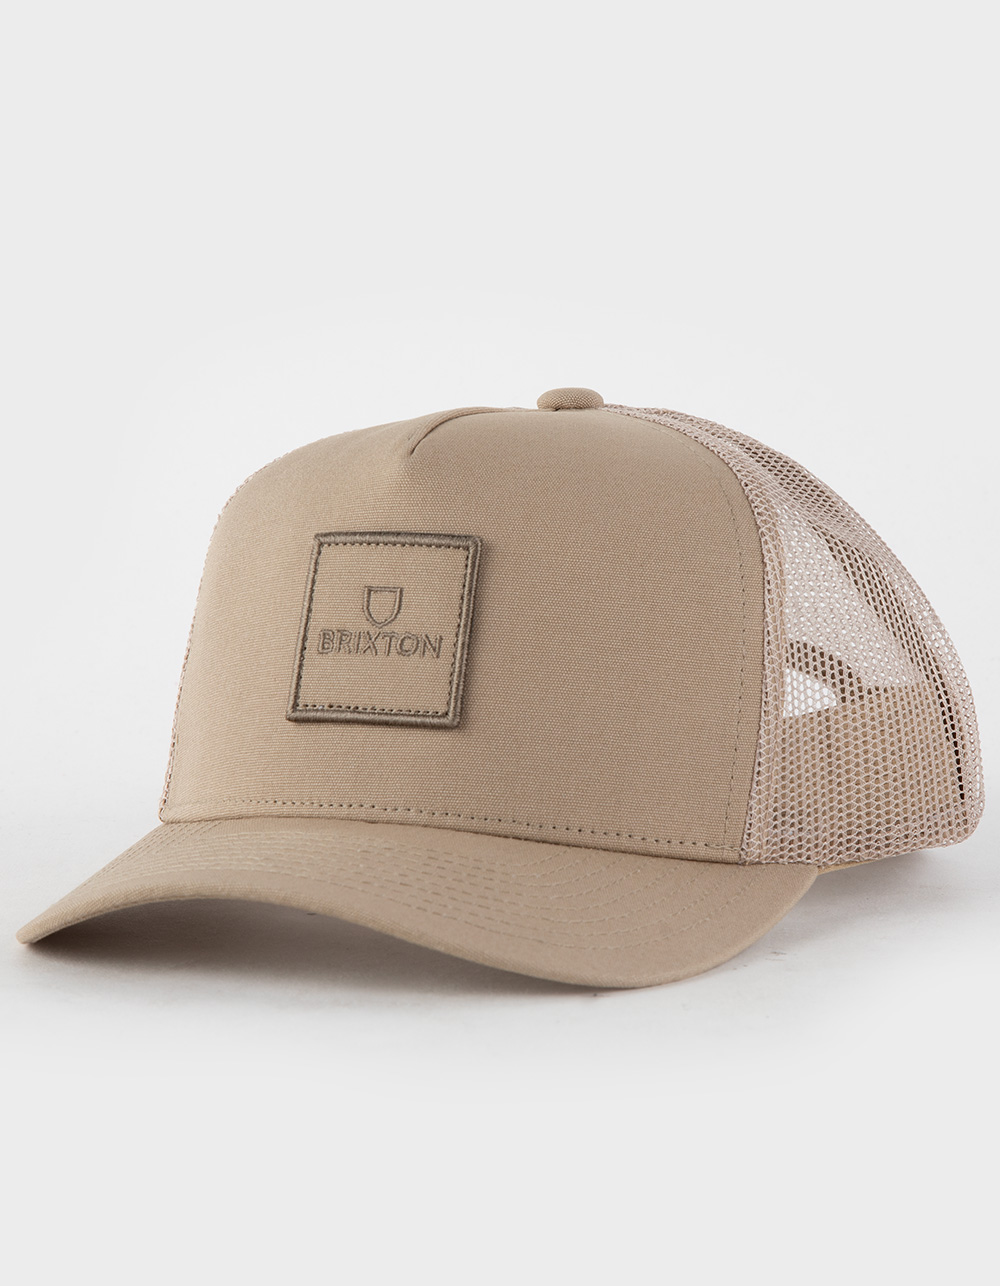 Trucker Hat Men Monogram Fitted Trucker Hats for Men Hats Snapback